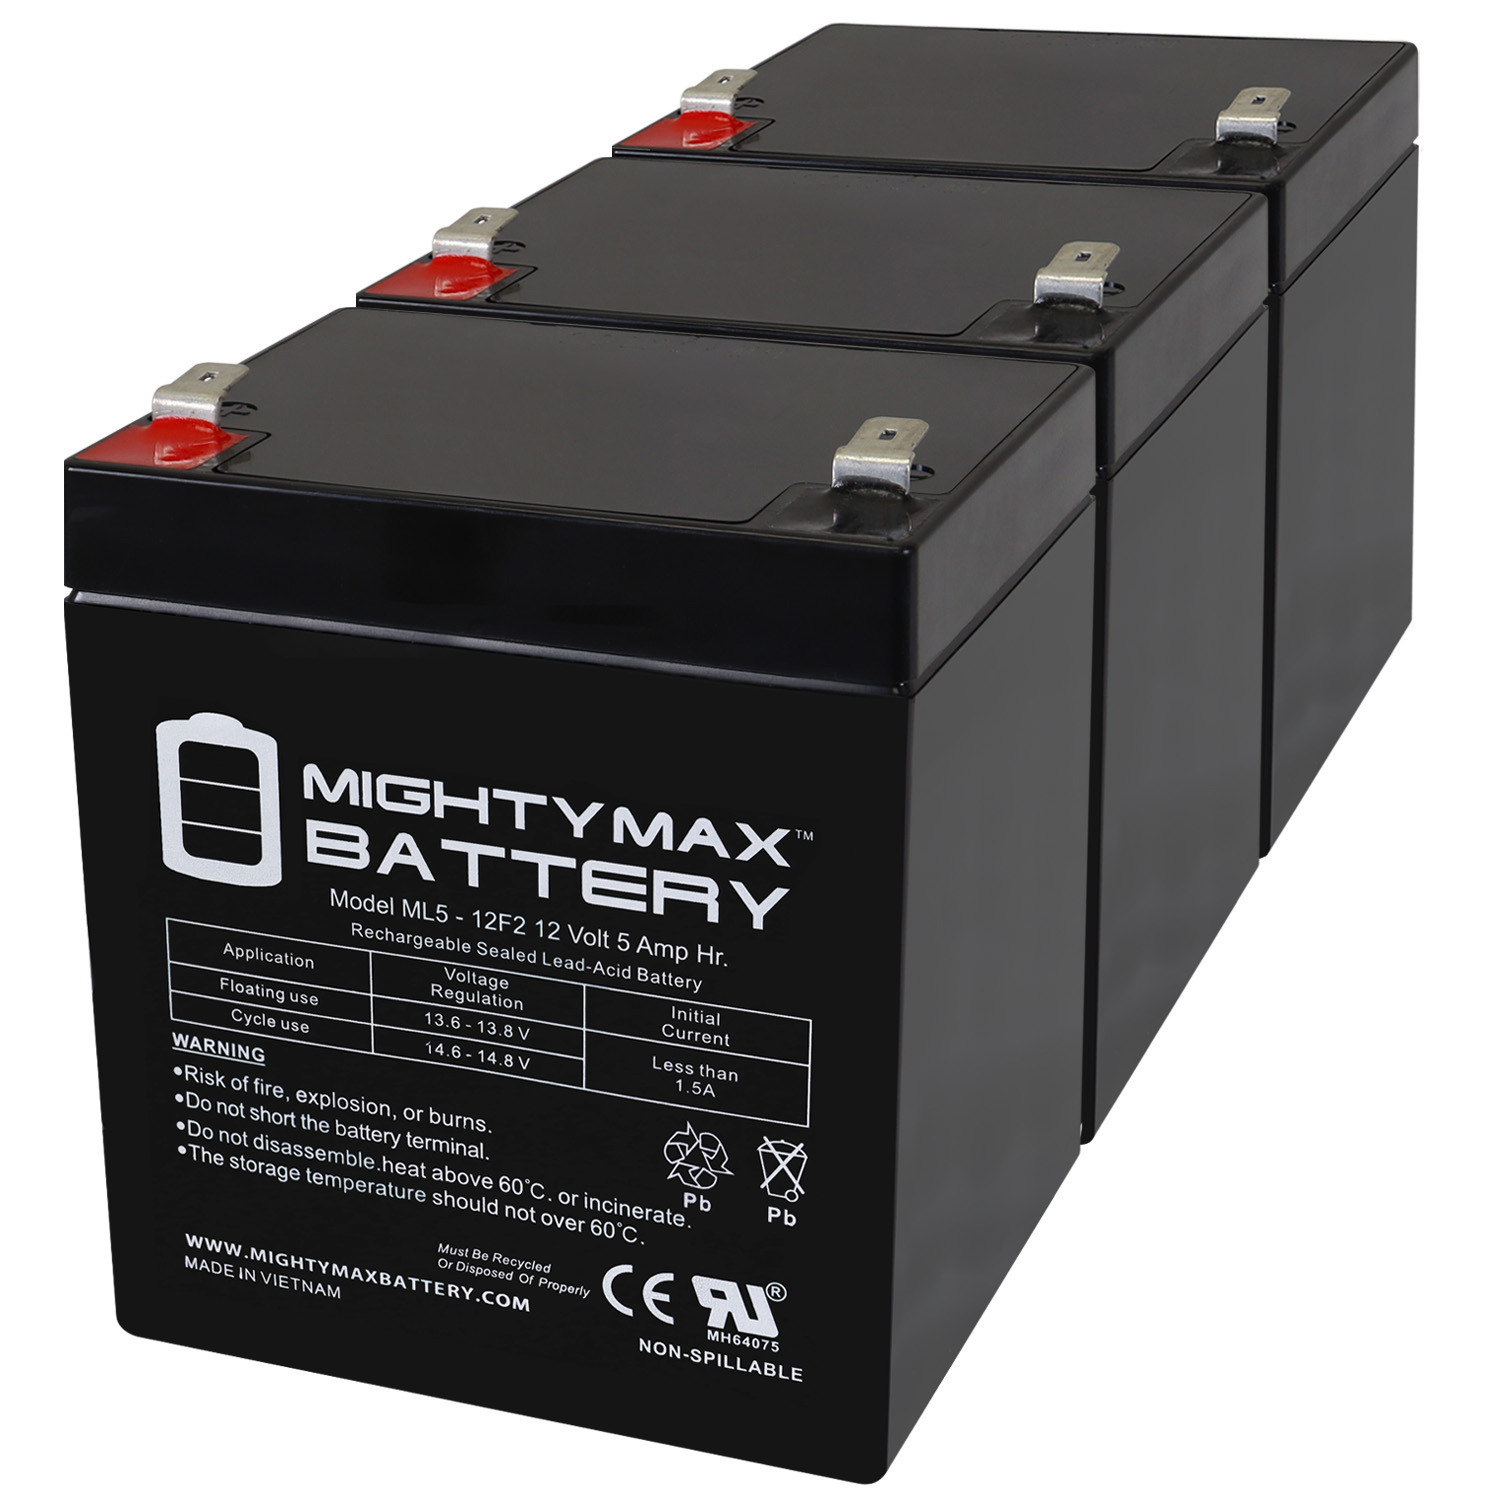 12V 5Ah F2 SLA Replacement Battery for Drift Crazy Cart - 25143499 - 3 Pack